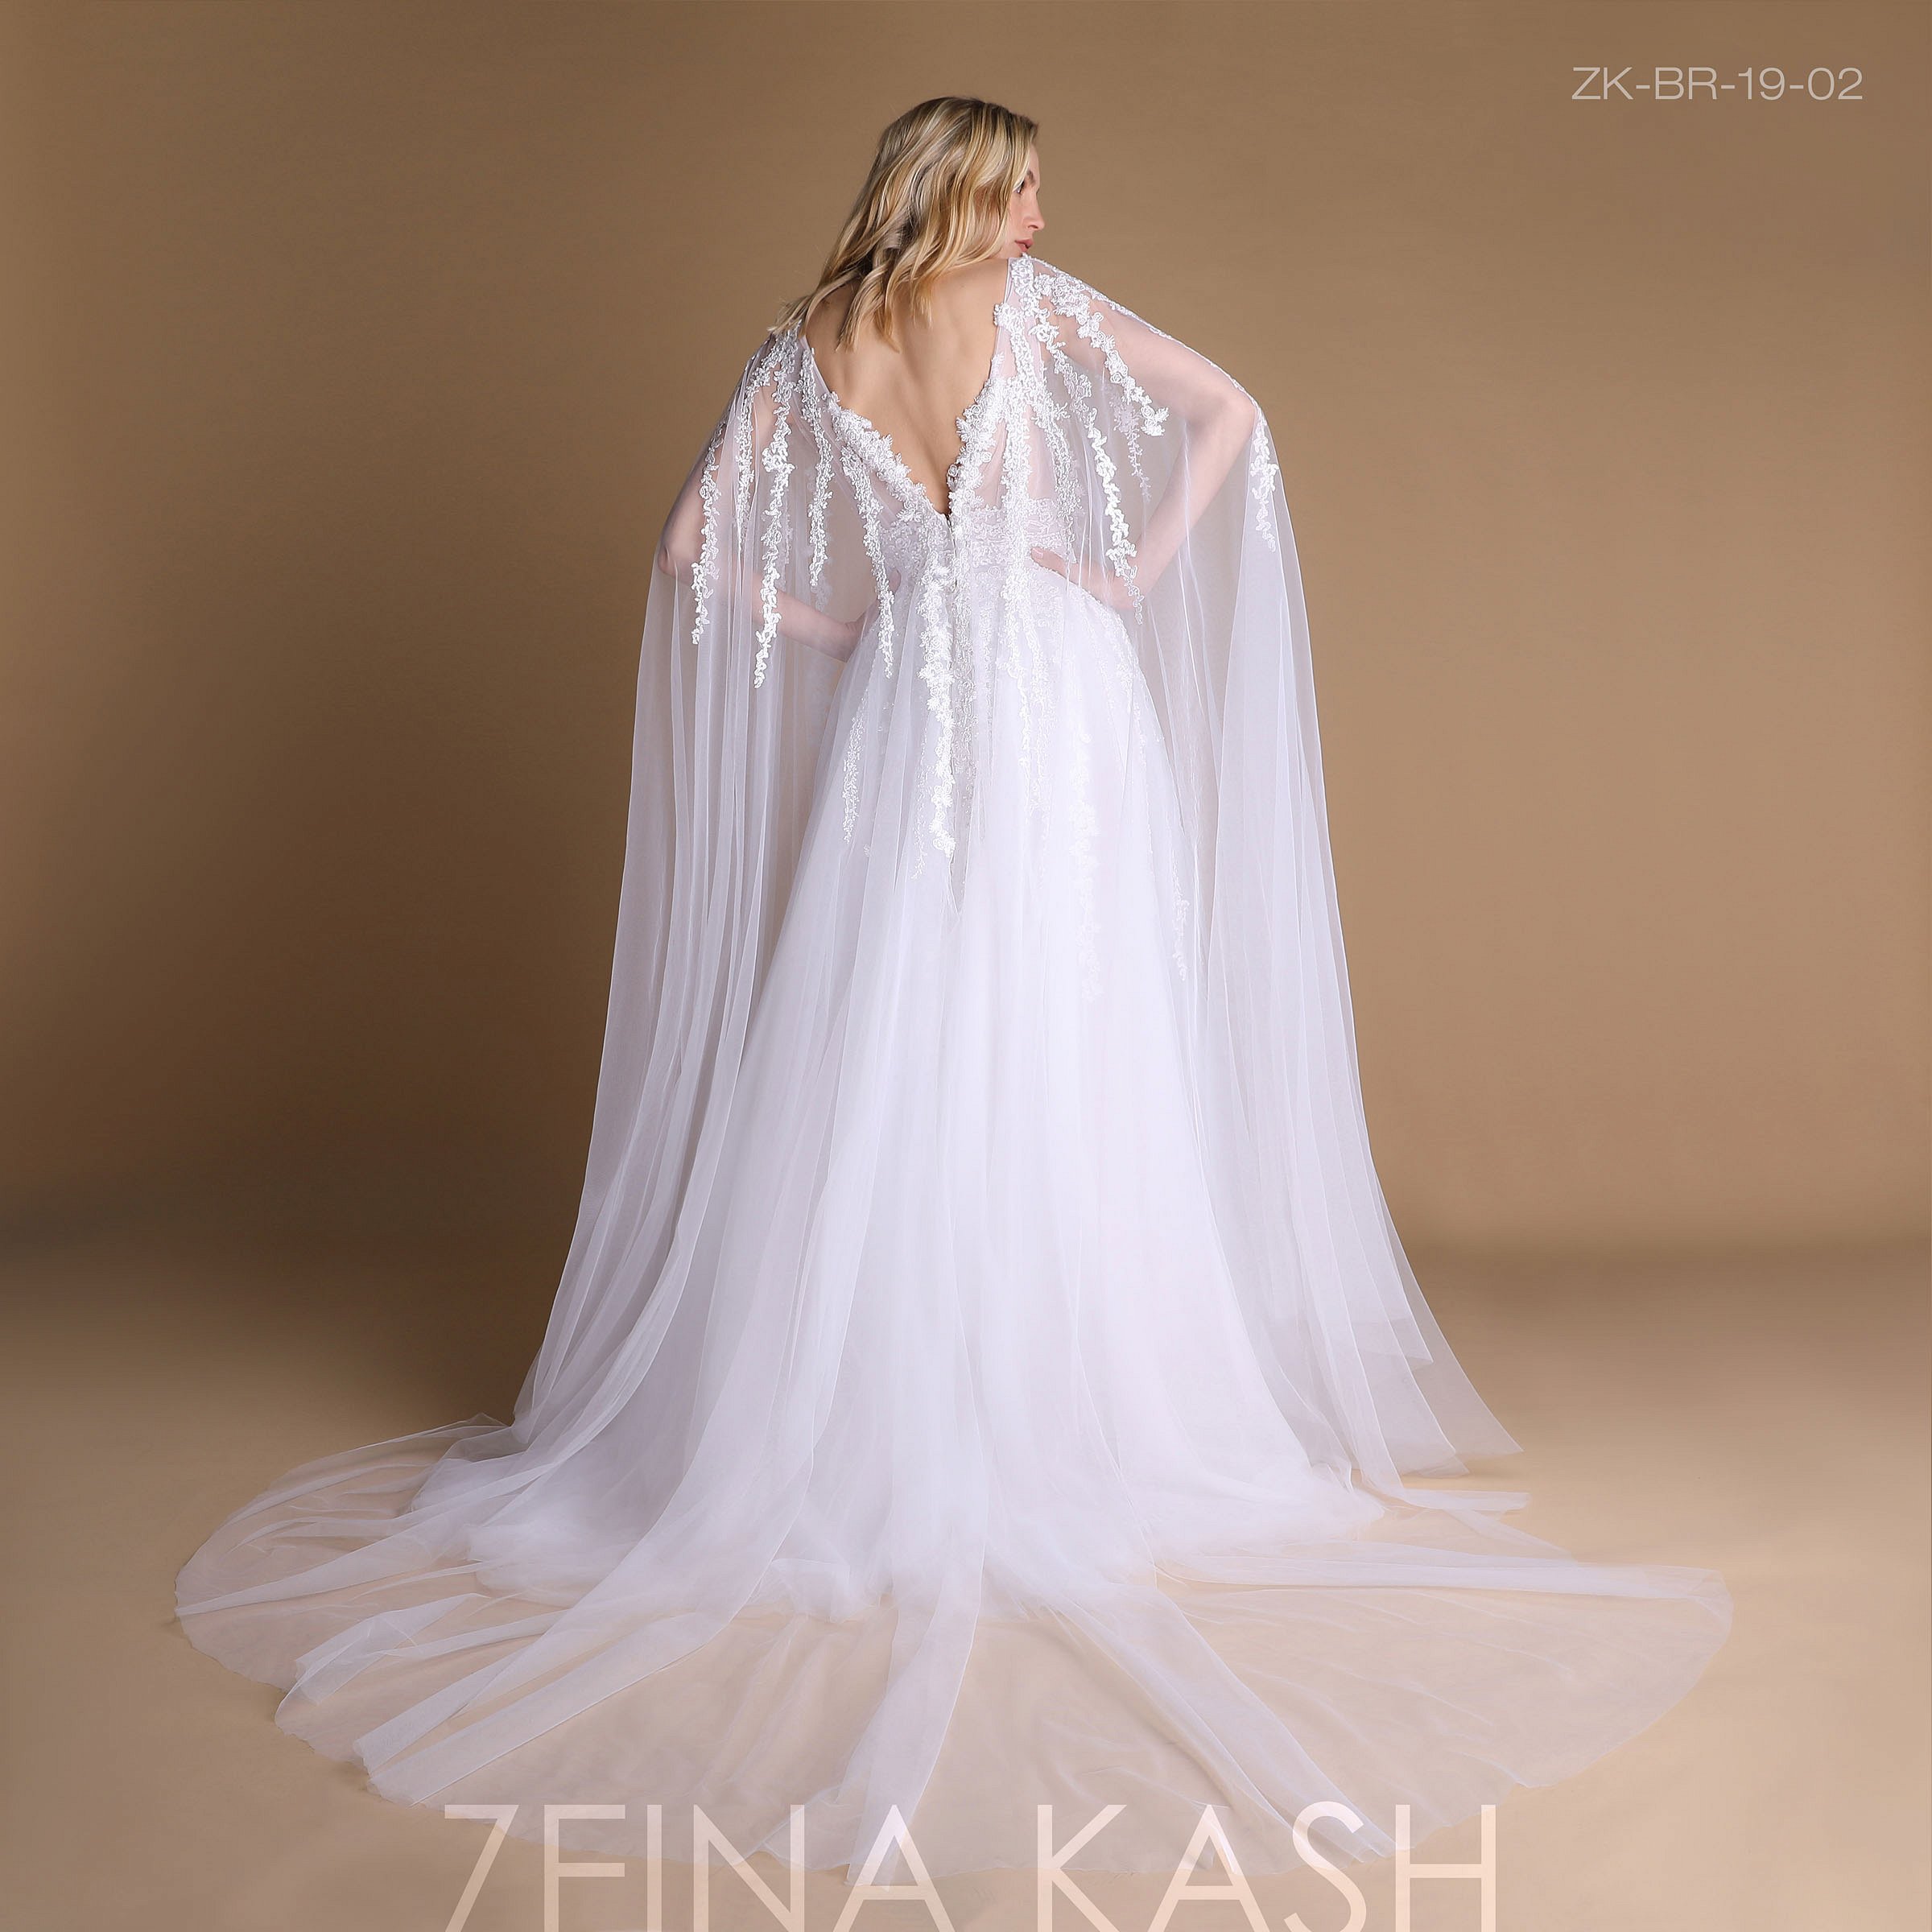 Zeina Kash 2019 collection - Bridal